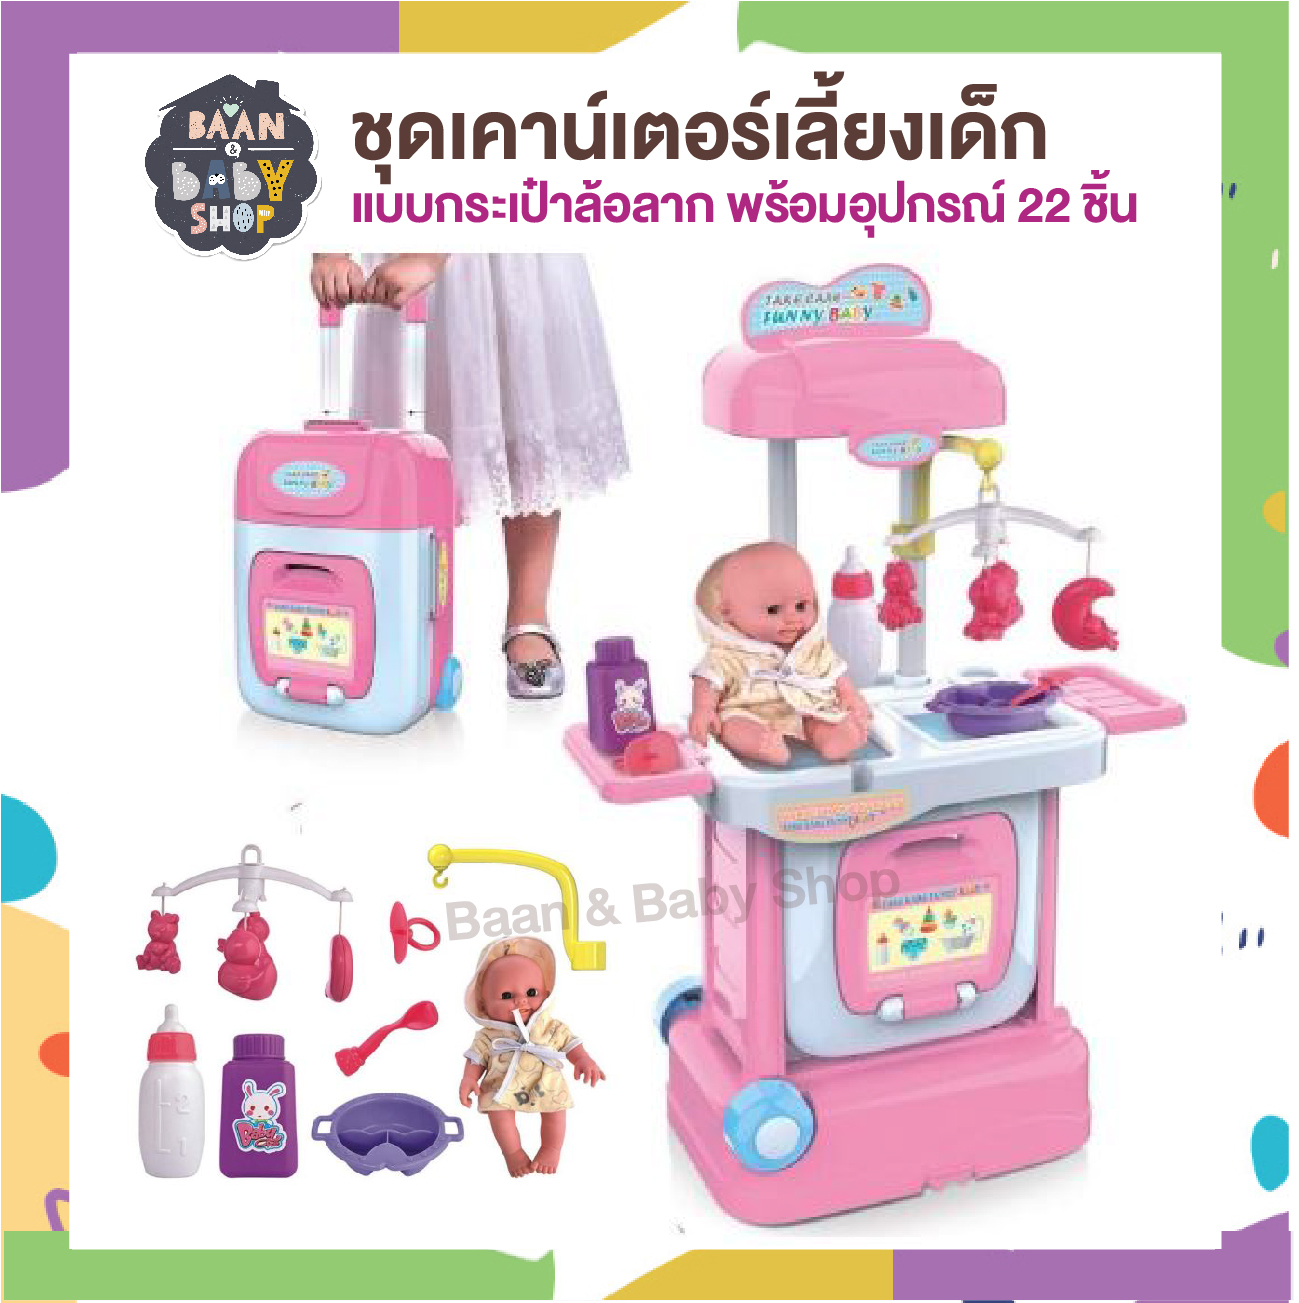 Baan & Baby Shop ชุดเคาน์เตอร์เลี้ยงเด็ก แบบกระเป๋าล้อลาก พร้อมอุปกรณ์ 22 ชิ้น ของเล่น อุปกรณ์เลี้ยงเด็กเล็ก ของเล่นบทบาทสมมุติ Nursery Drawbar Suitcase Trolley Playset for Kids Children W810